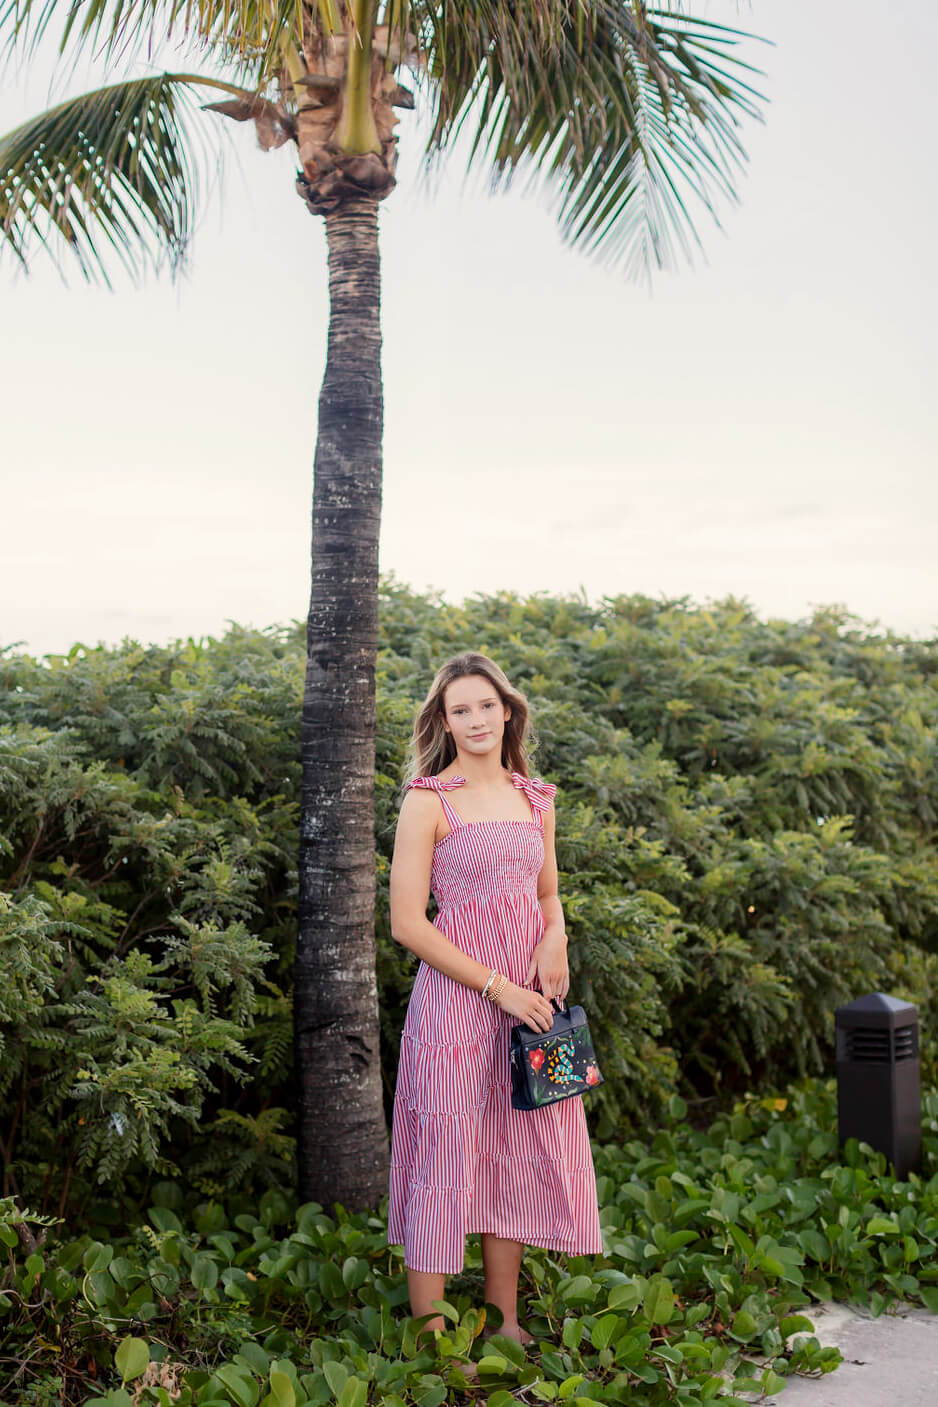 Bright Beautiful Dress under a Palm